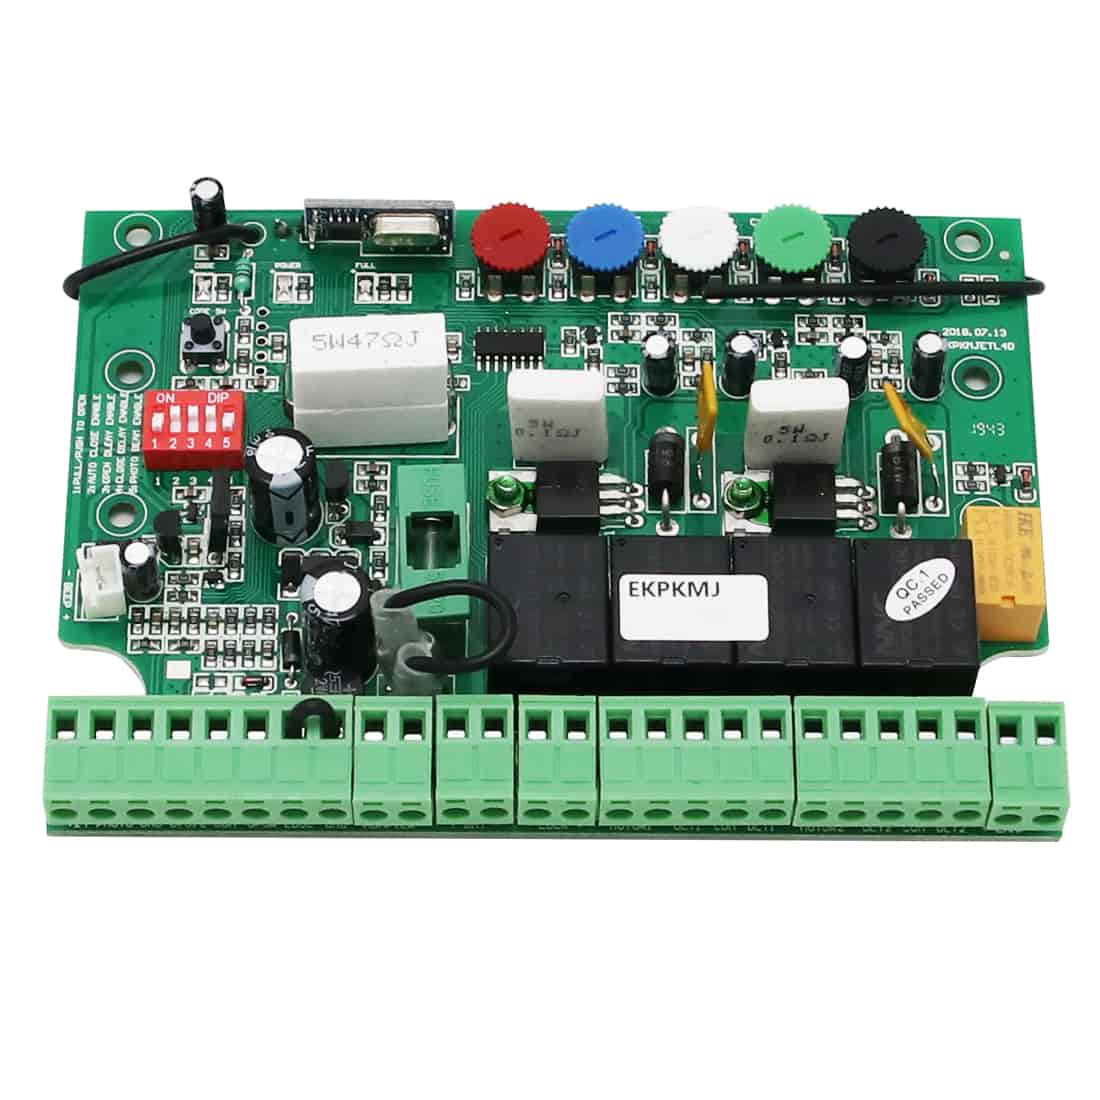 EKPKMJ3B PCB Print Circuit Control Board for PW302 Swing Gate Opener